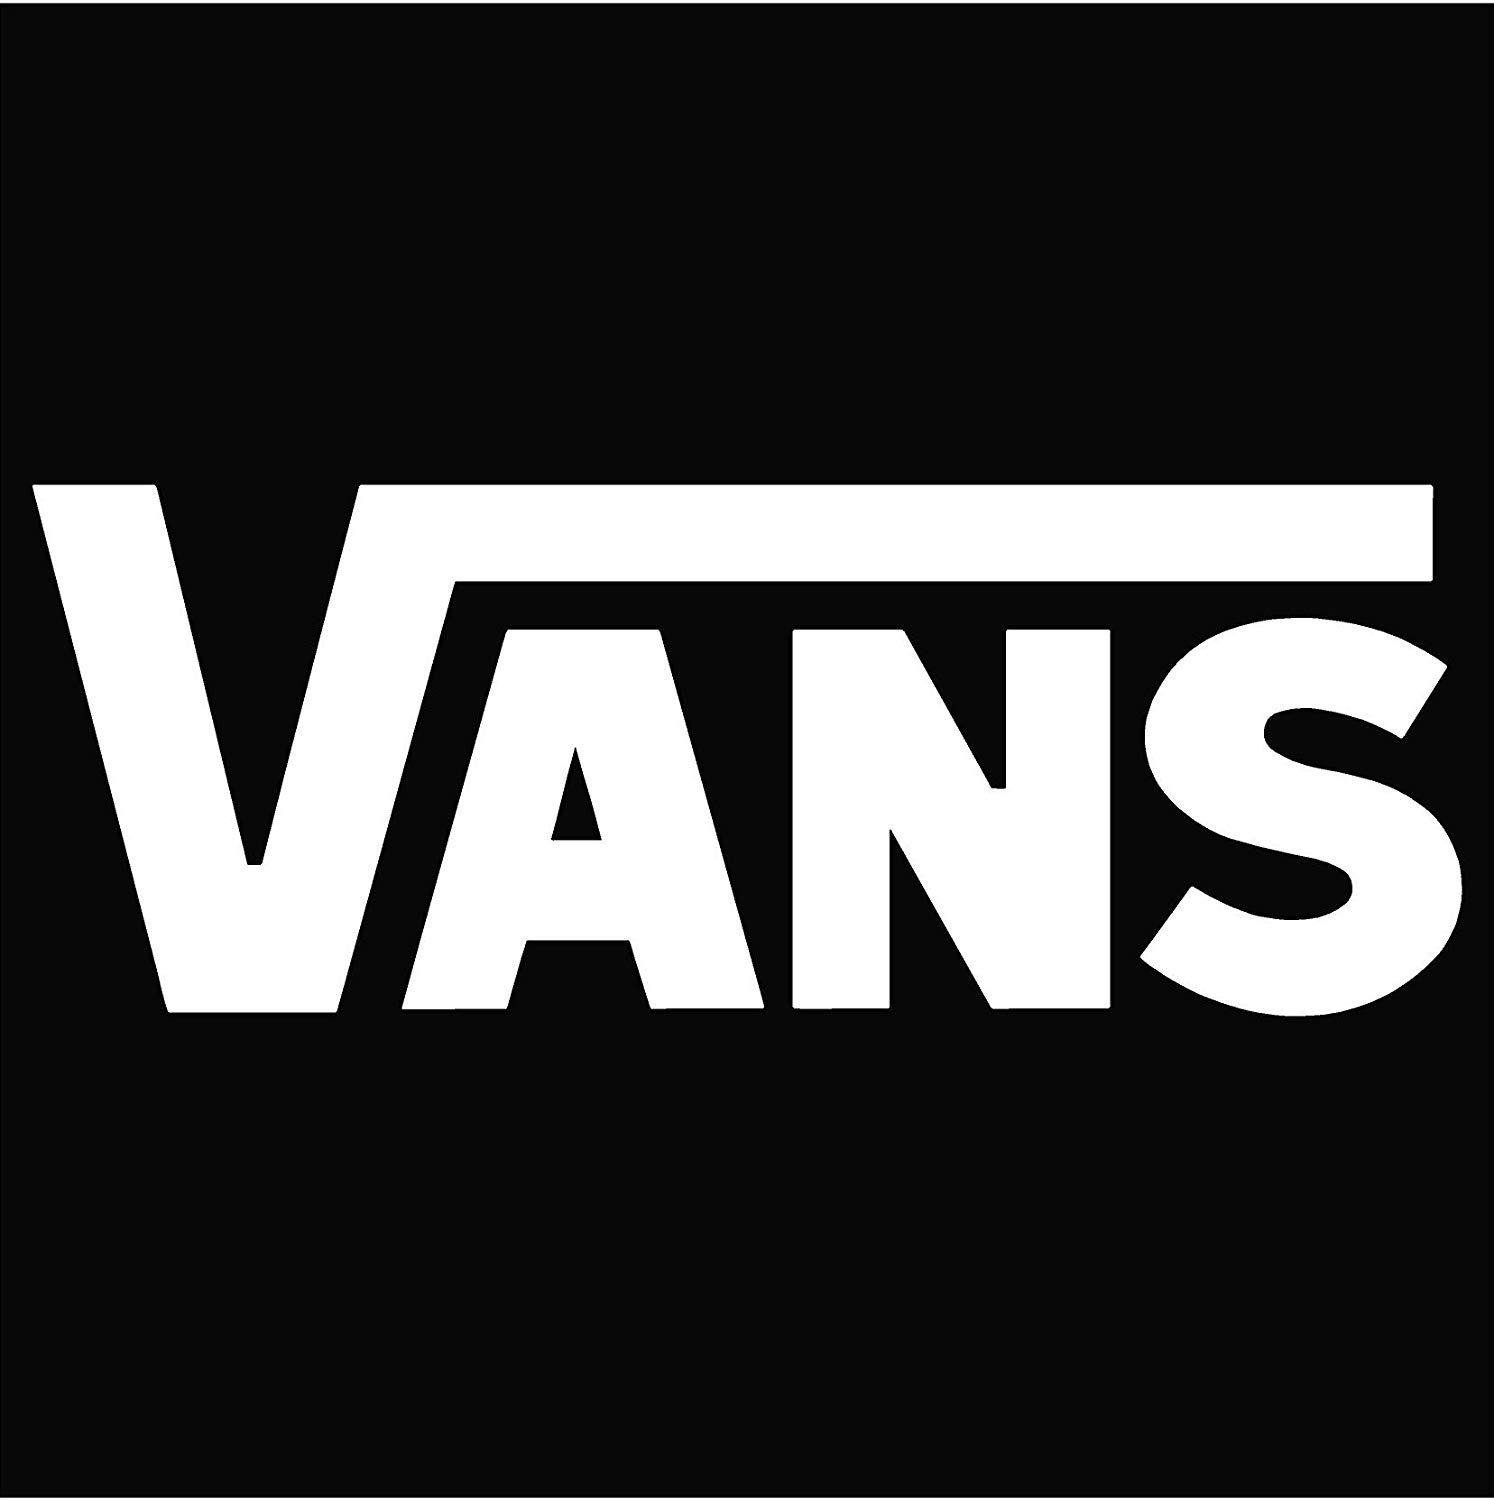 Black Vans Logo - Amazon.com: Vans Logo Vinyl Sticker Decal Decal-White-6 Inch: Automotive